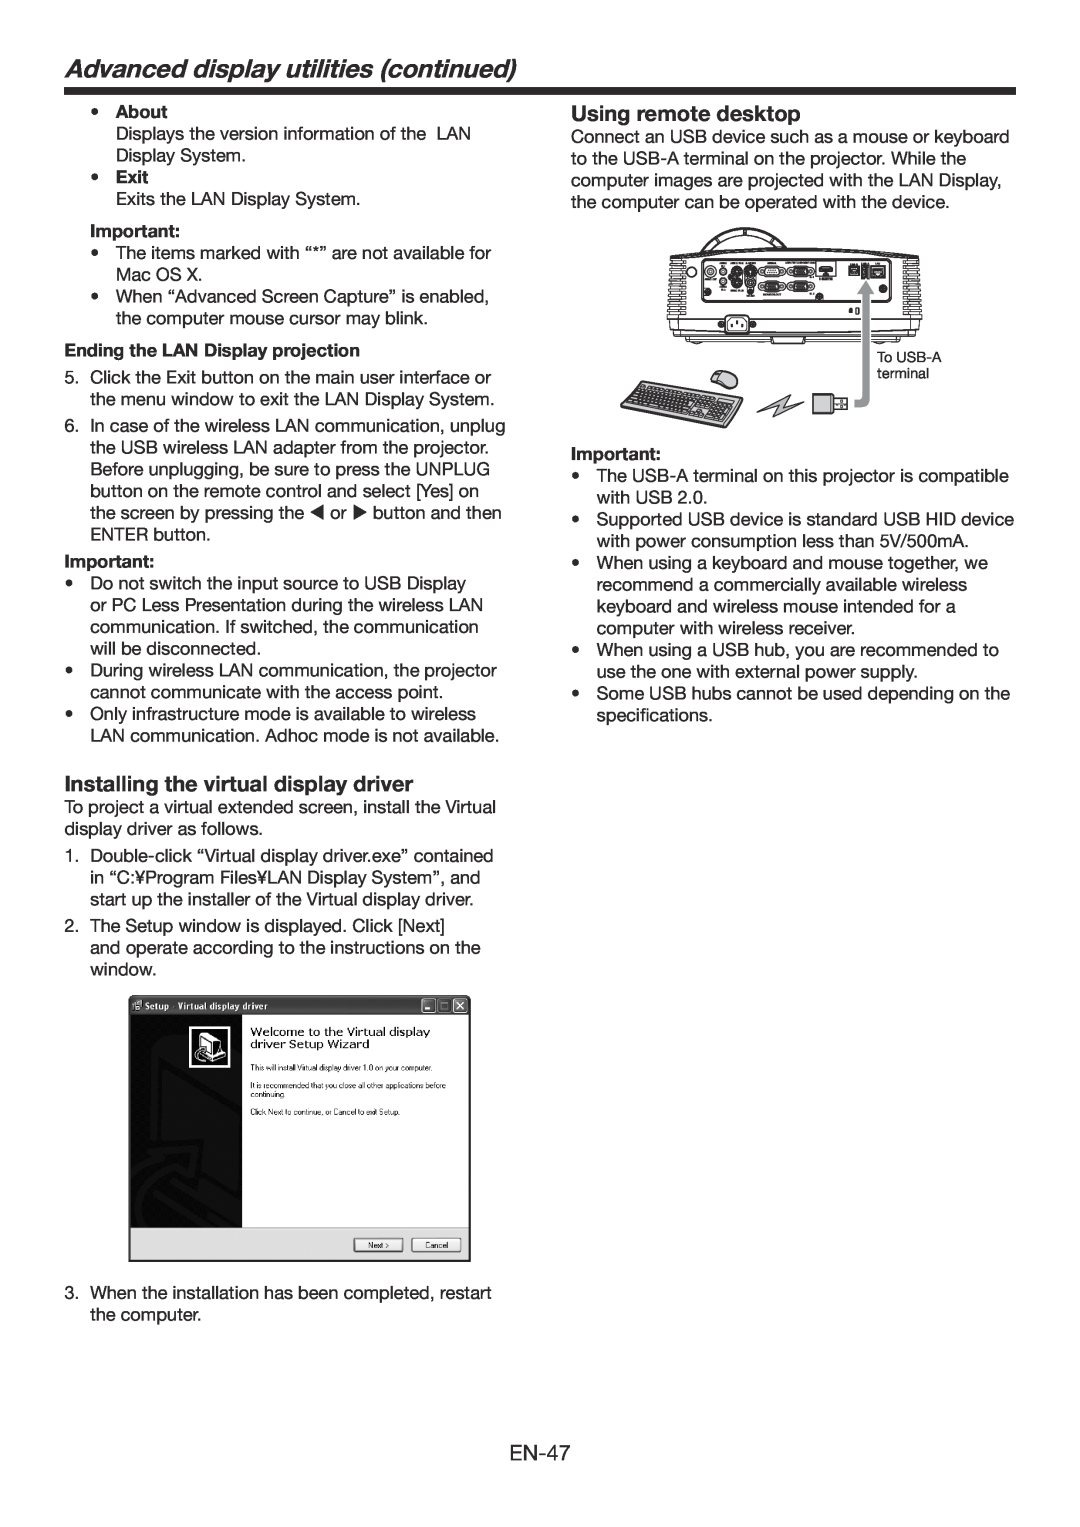 Mitsubishi Electronics WD390U-EST user manual Installing the virtual display driver, Using remote desktop, About, Exit 